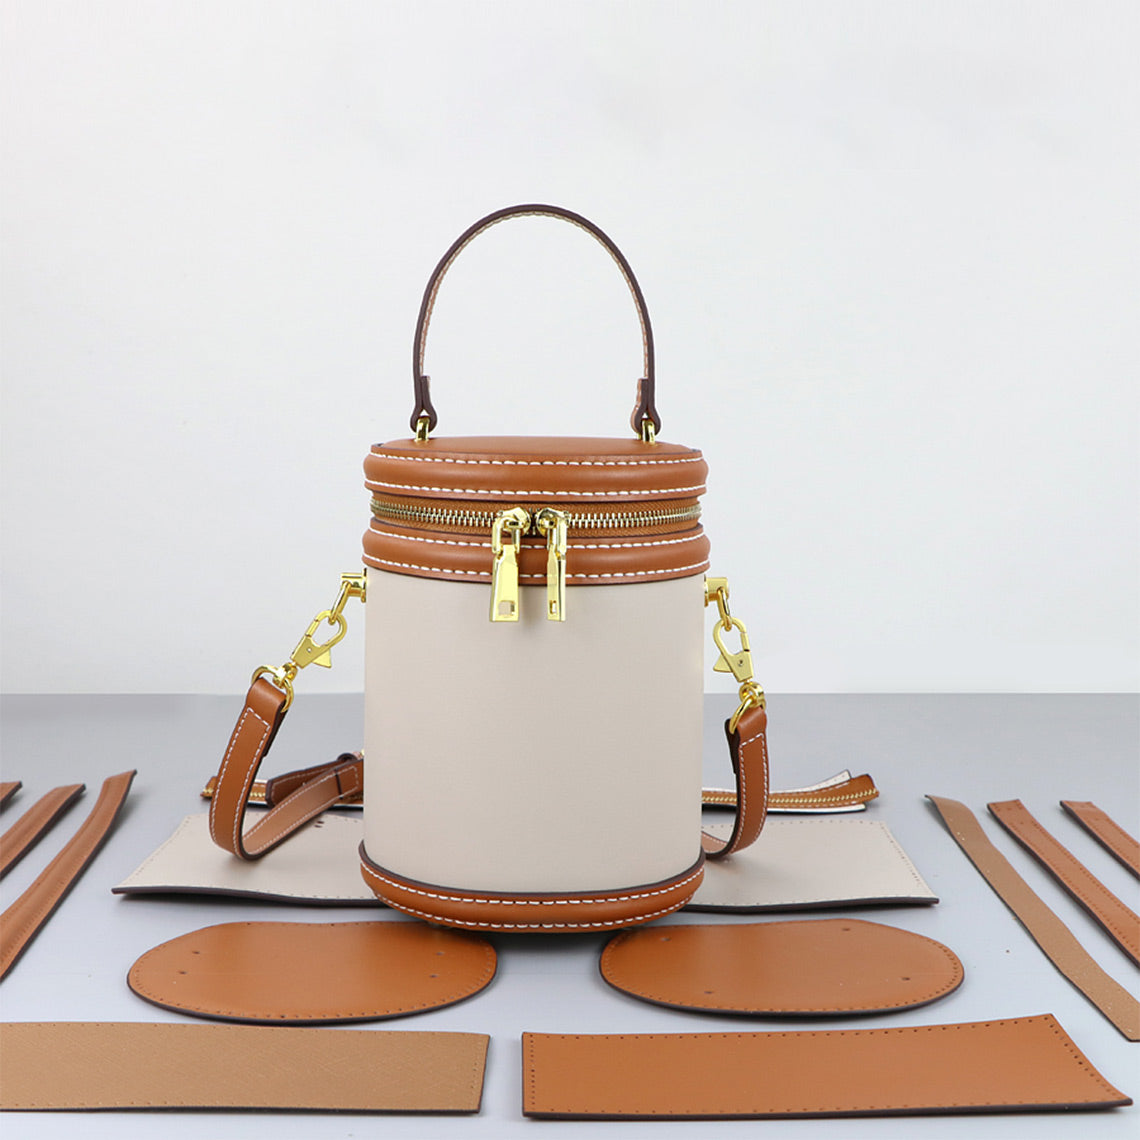 Leather Bag Patterns | Bag Making DIY Project for Craft Lovers - POPSEWING®